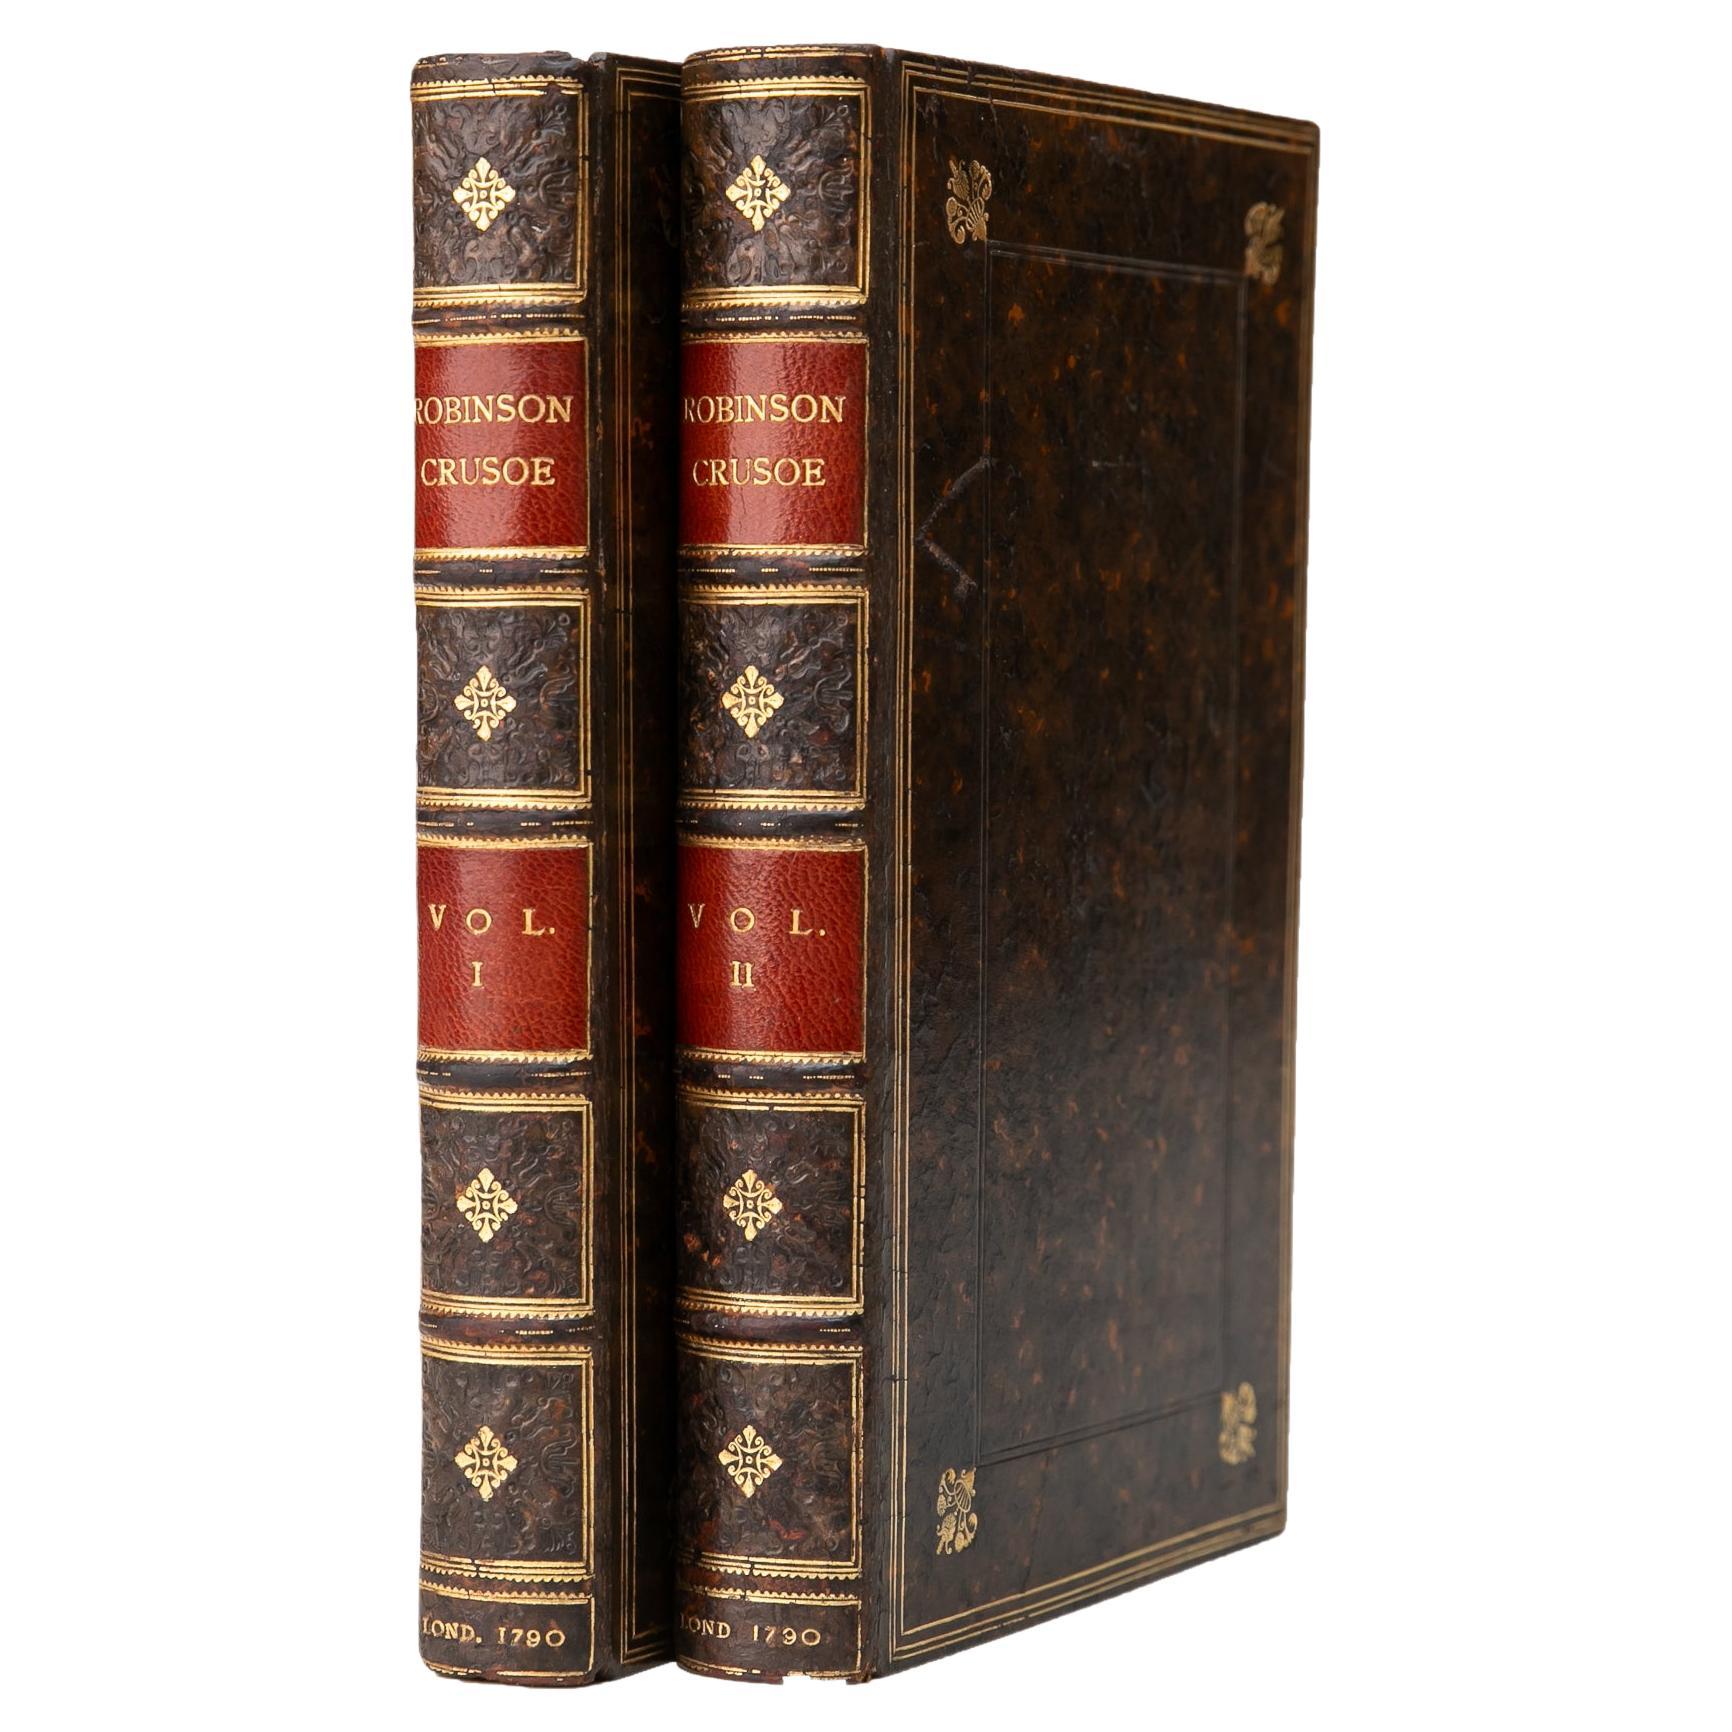 2 Volumes. Daniel Defoe, Robinson Crusoe. For Sale